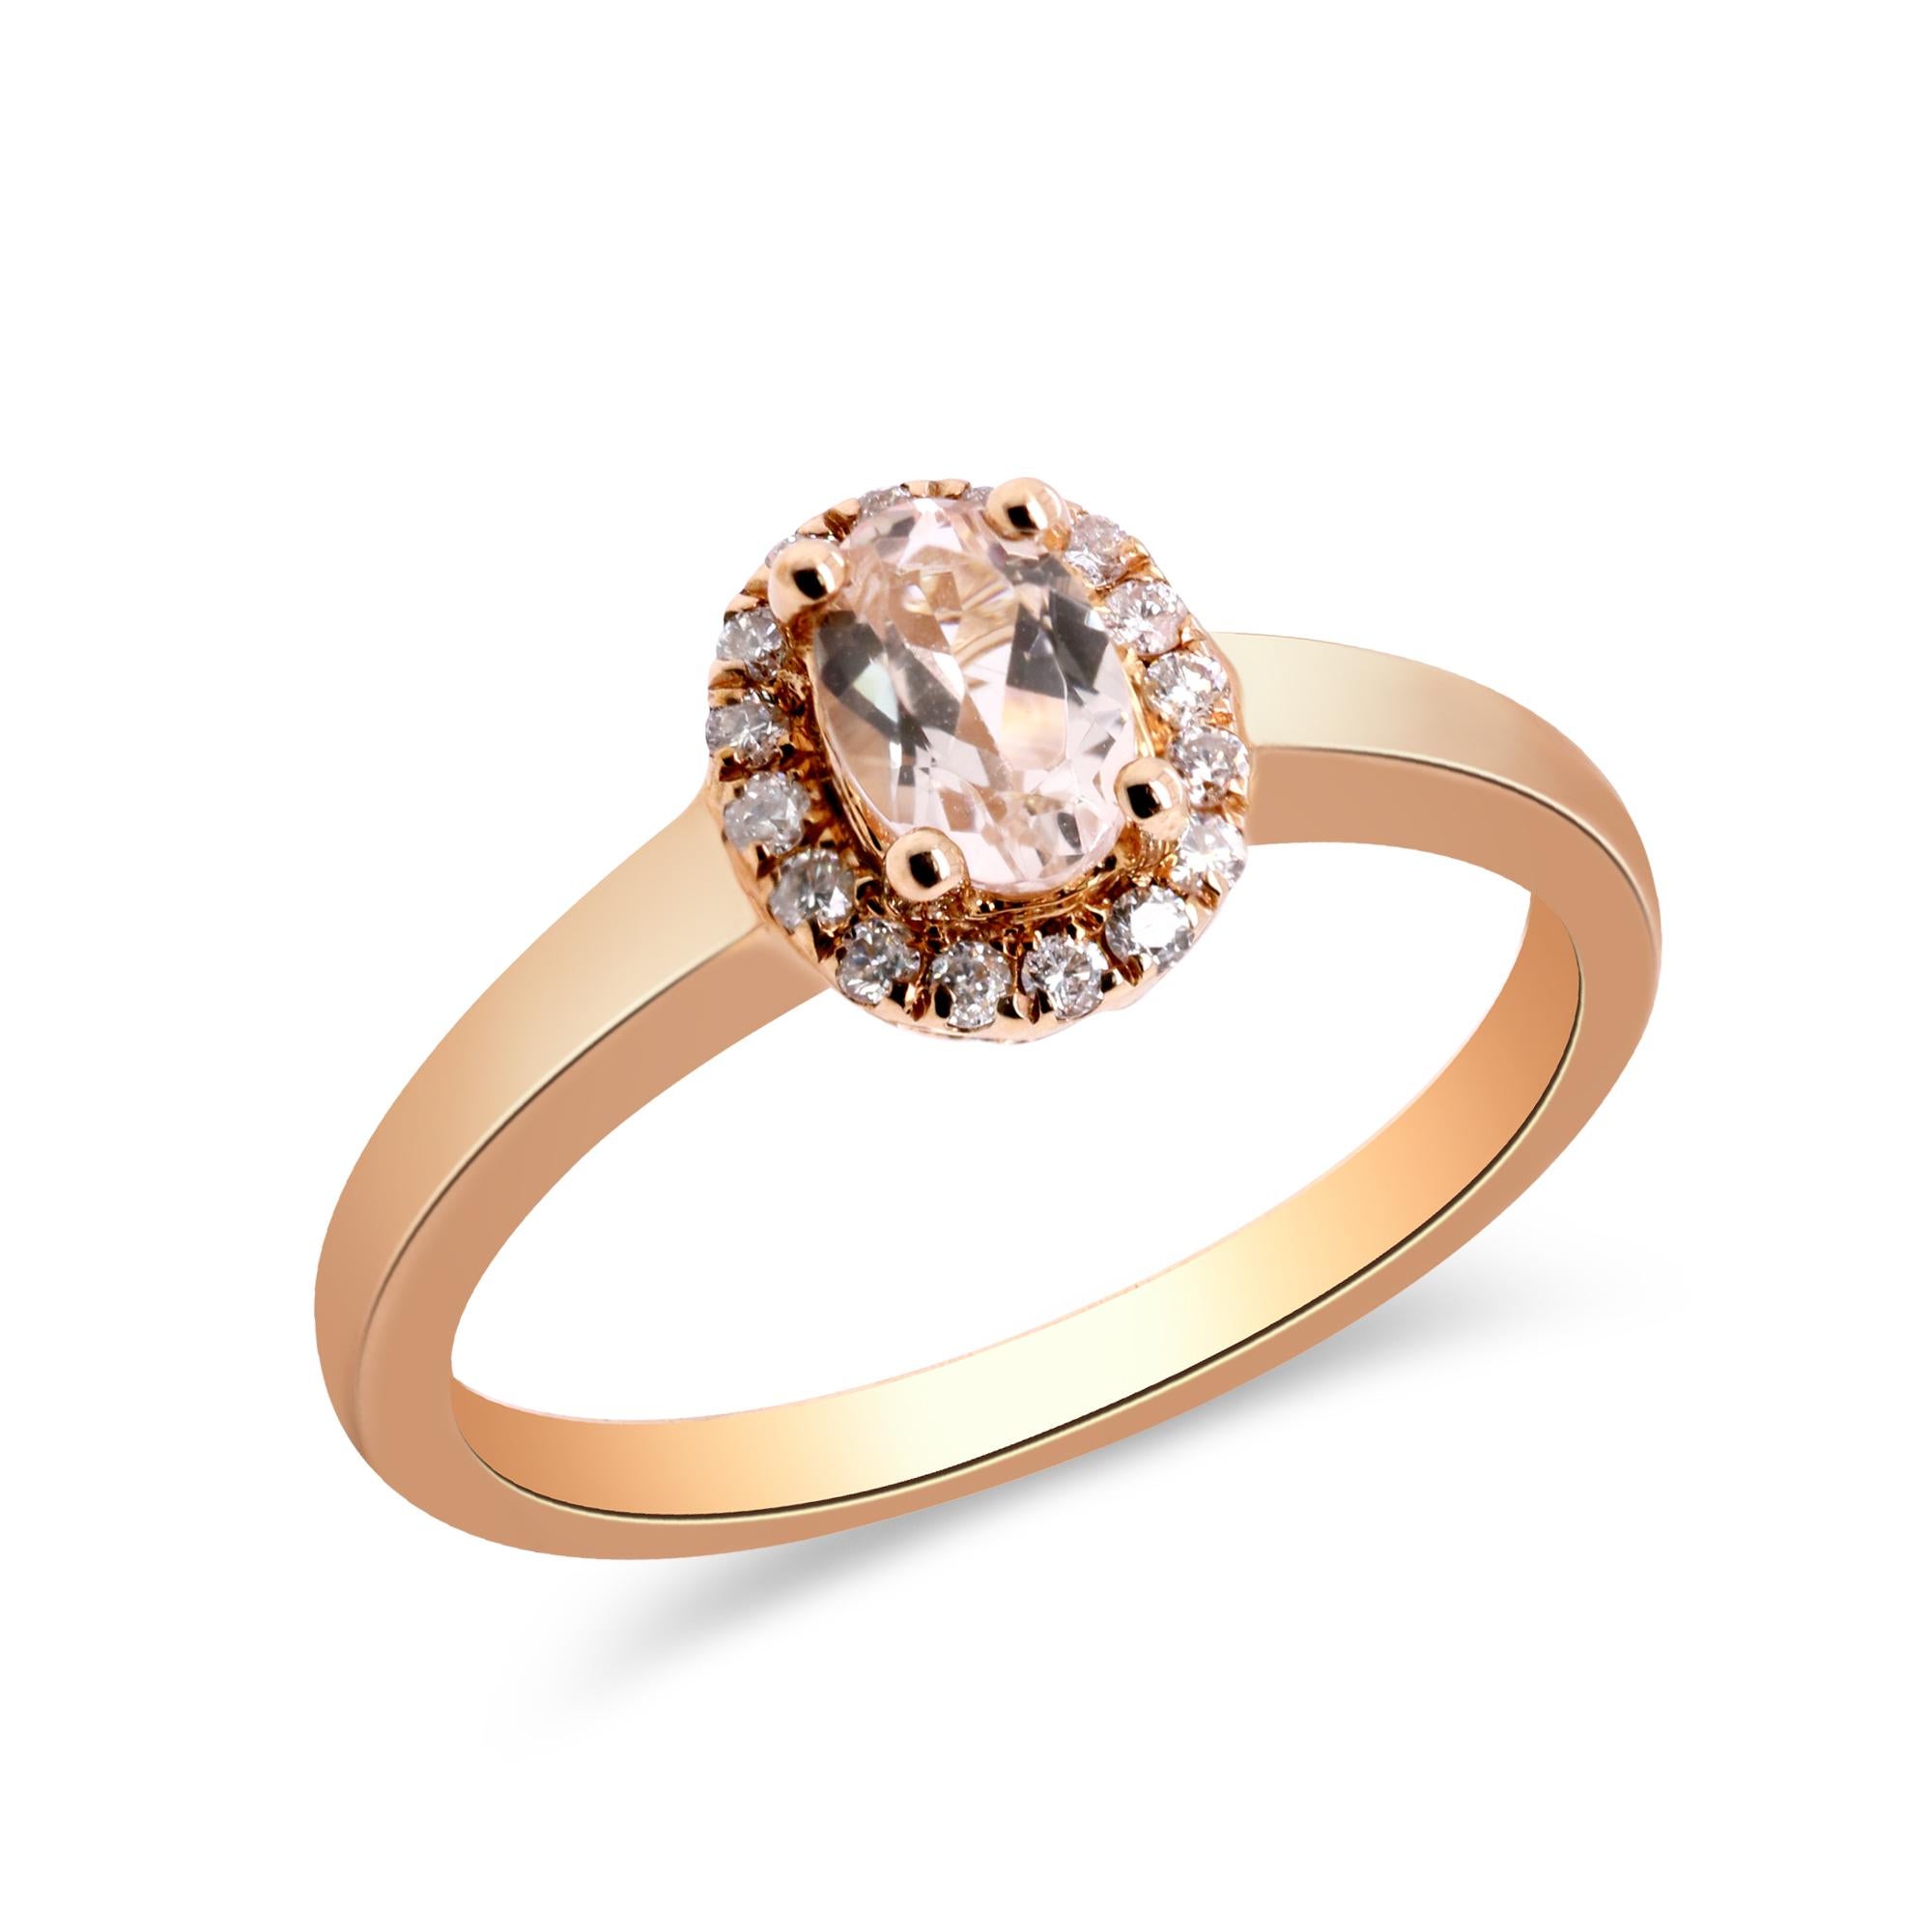 23 carat diamond ring